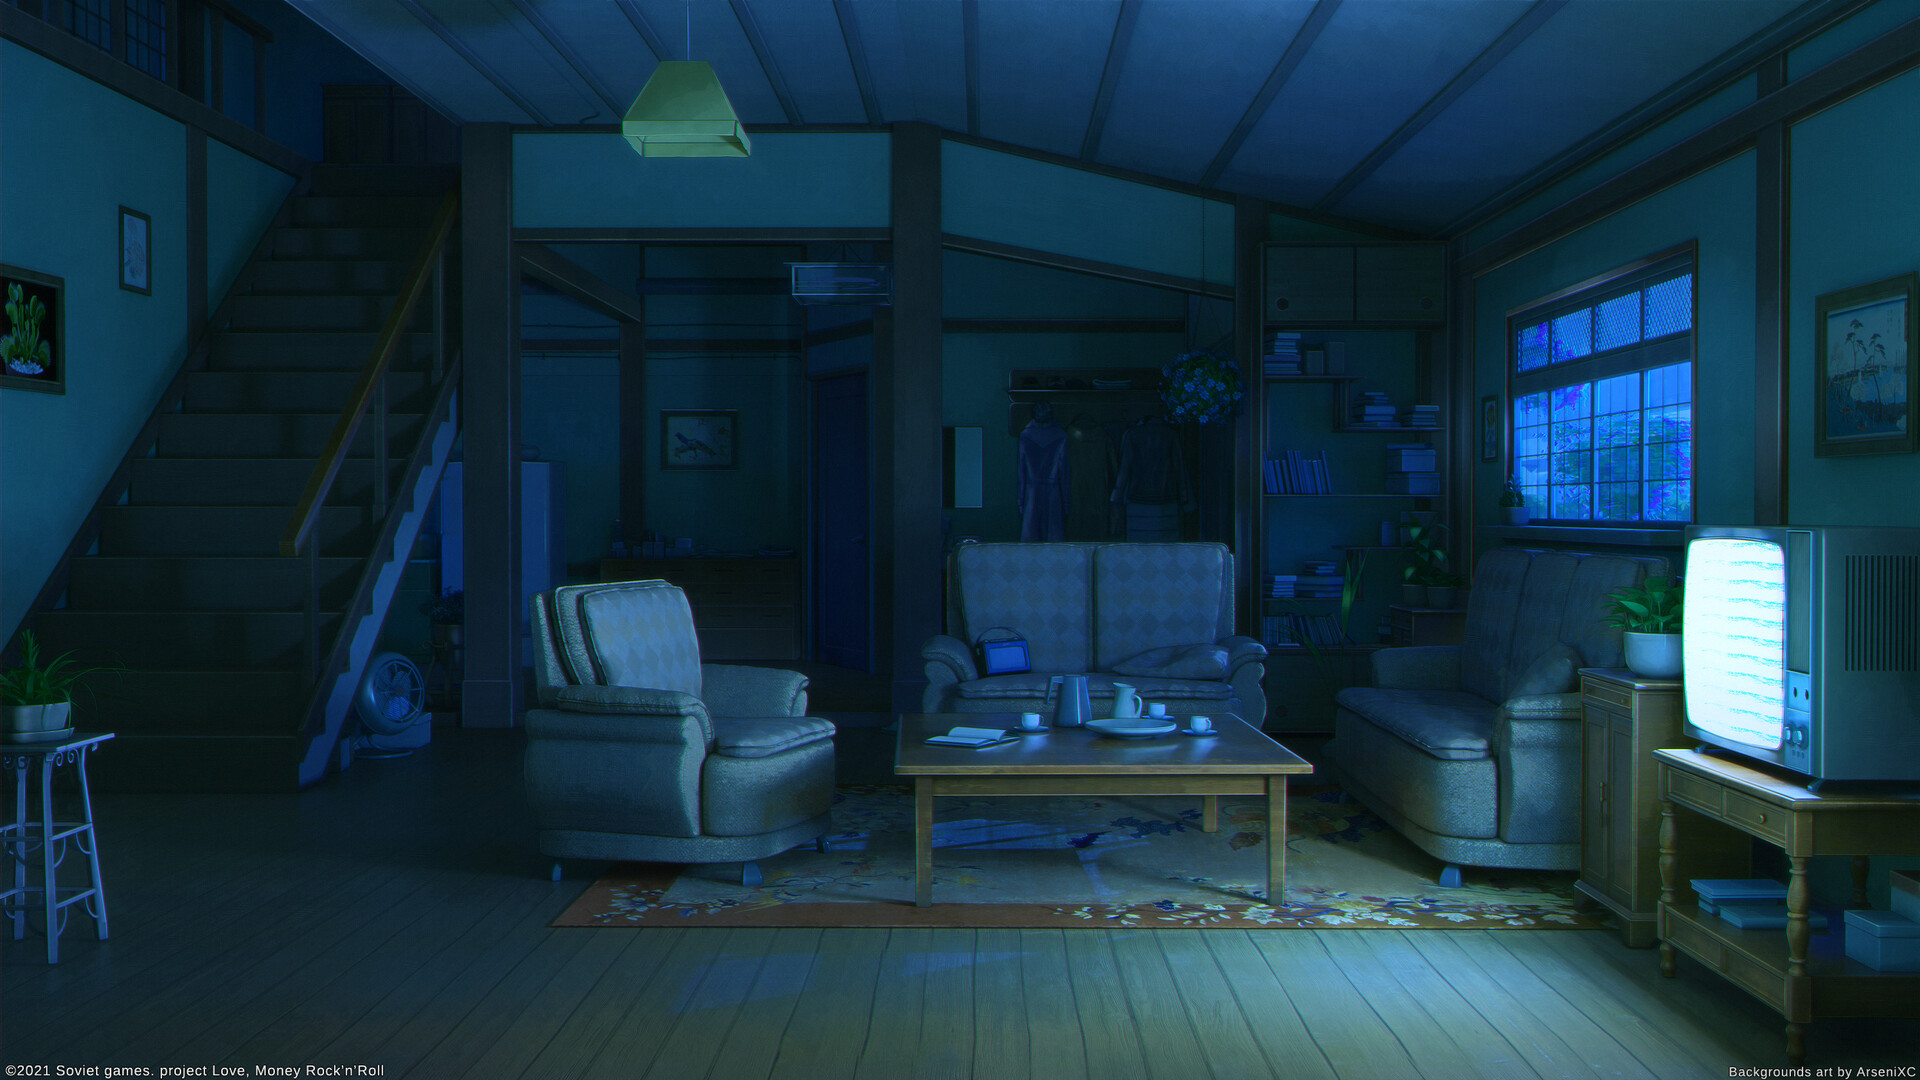 ArtStation - Himitsu house interior night version